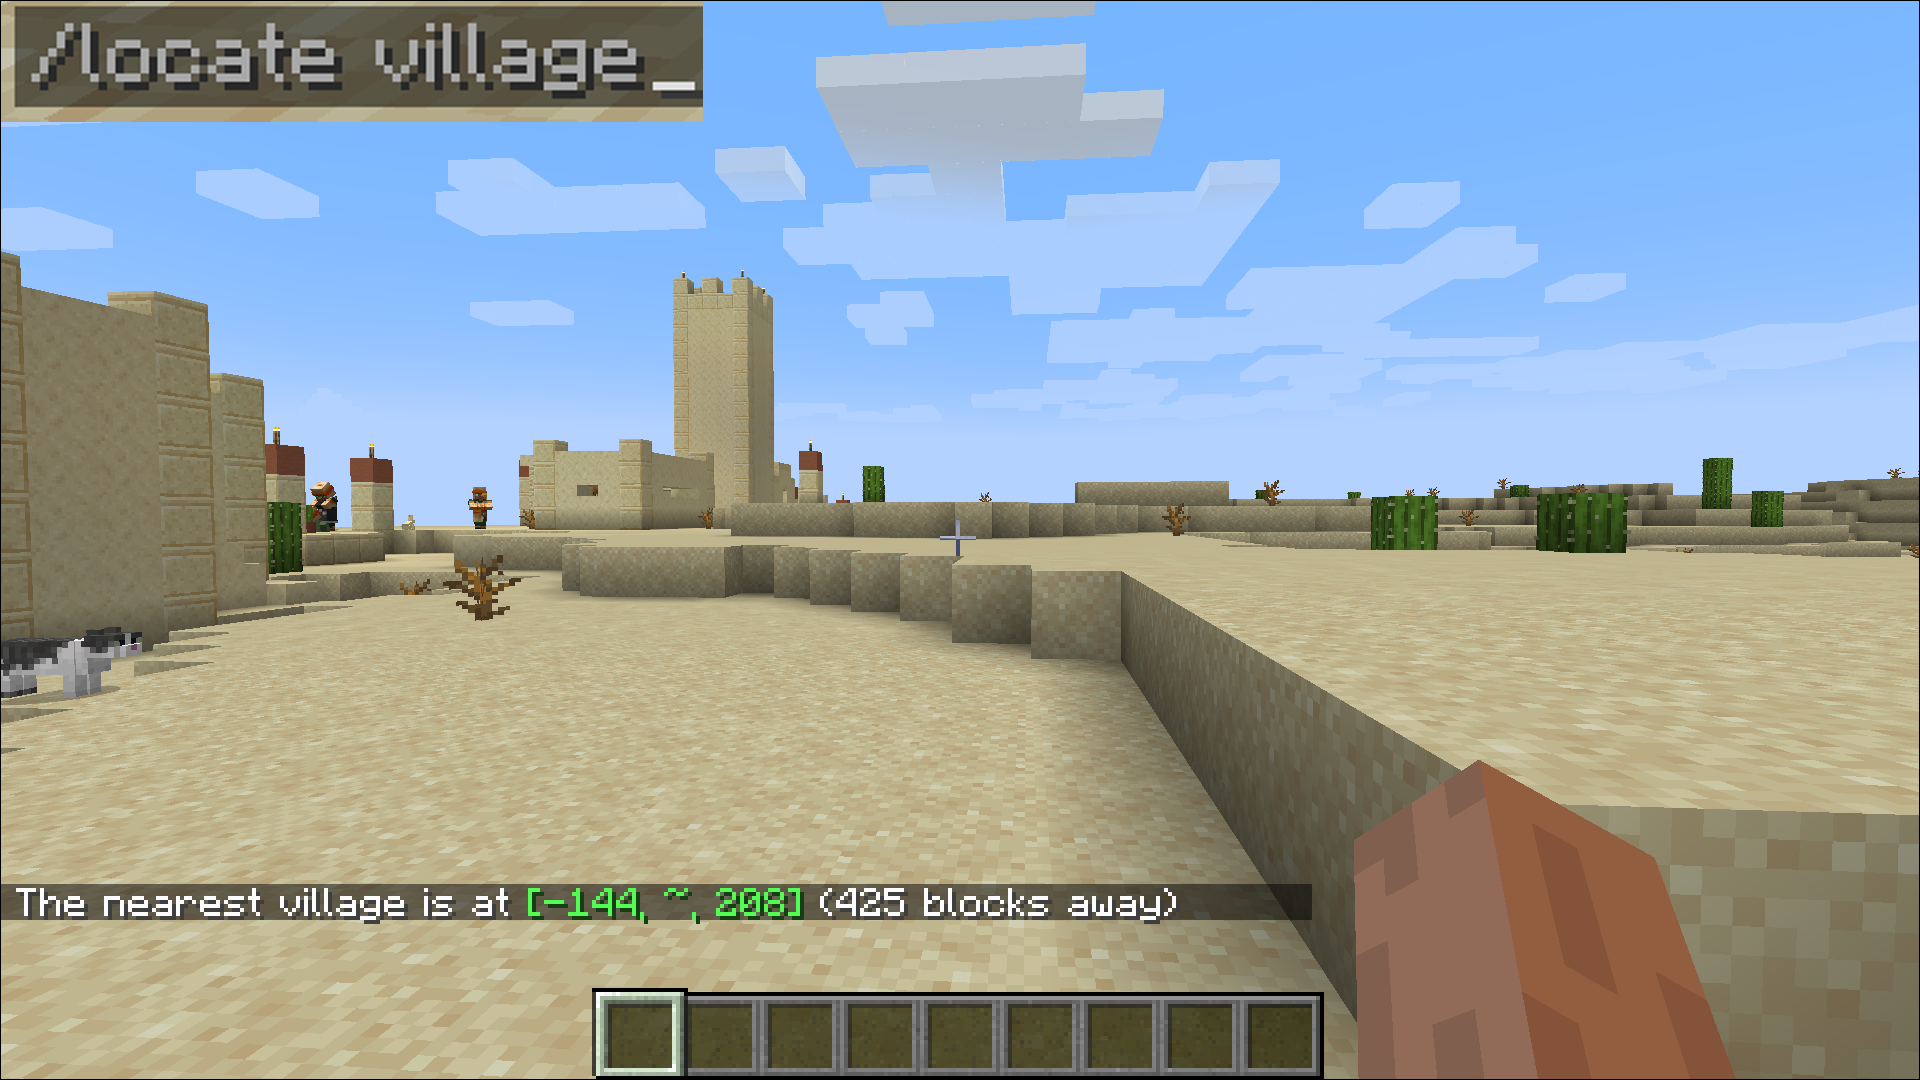 Locate village. Minecraft команда locate Village. Команда для нахождения деревни.